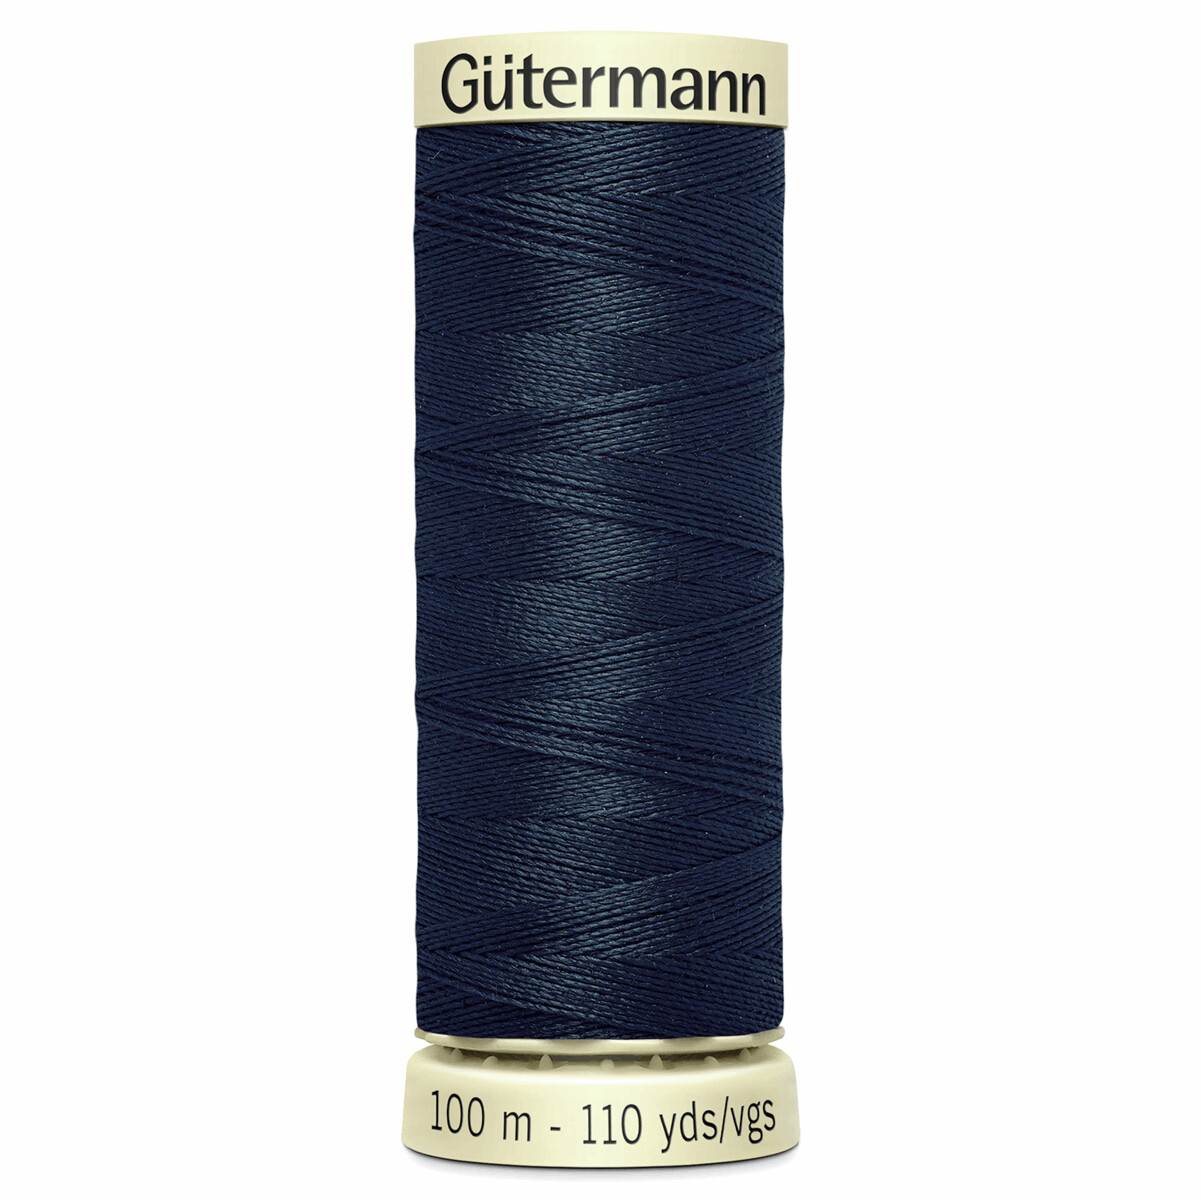 Gutermann Sew-All thread 595